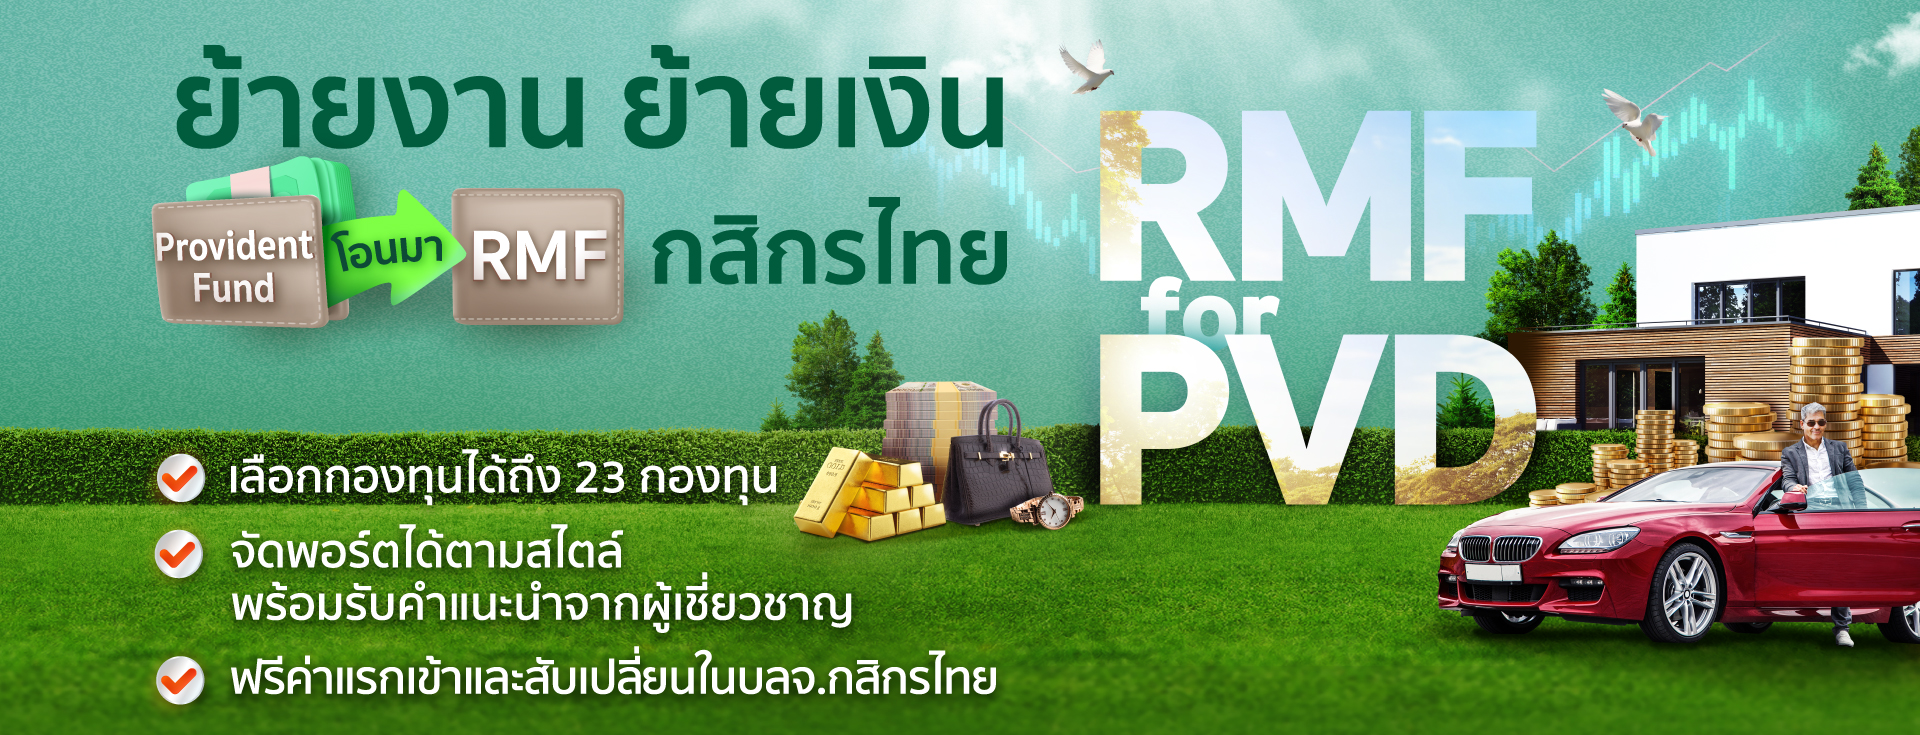 rmf for pvd กสิกรไทย, RMF for PVD, ย้ายเงิน Provident Fund, ย้าย pvd ,rmf for pvd กองไหนดี ,rmf for pvd มีที่ไหนบ้าง, RMF for PVD มีอะไรบ้าง